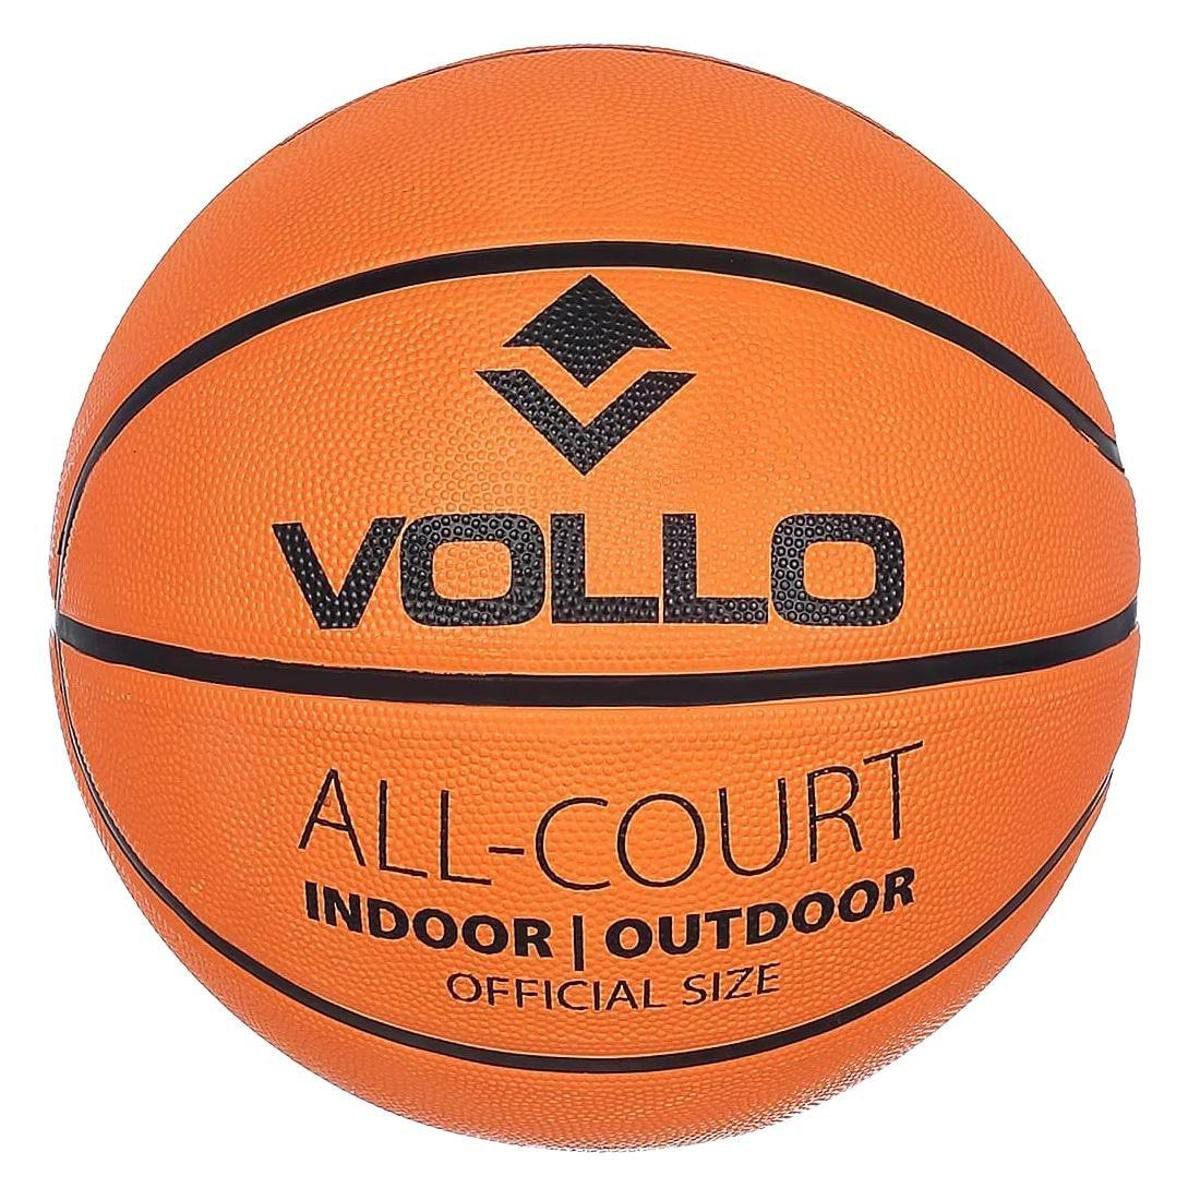 Bola de Basquete Oficial da Vollo Tamanho 7 All-Court Indoor Outdoor - 1 Fit